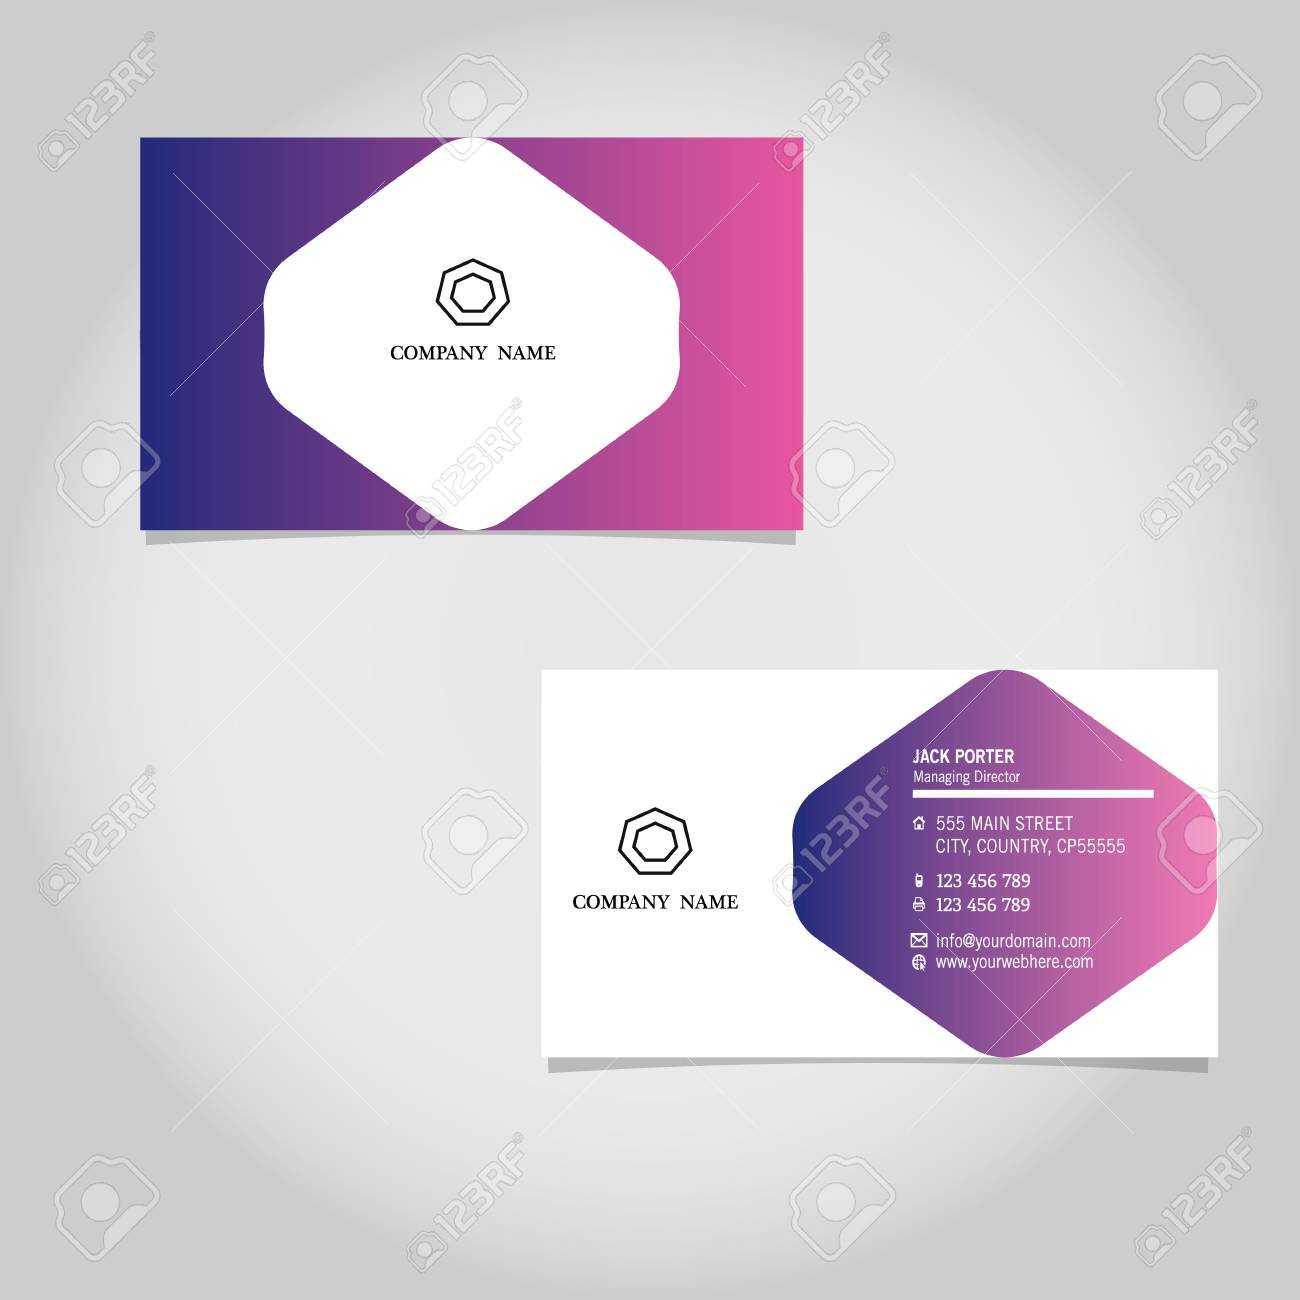 Vector Business Card Template Design Adobe Illustrator Inside Adobe Illustrator Card Template